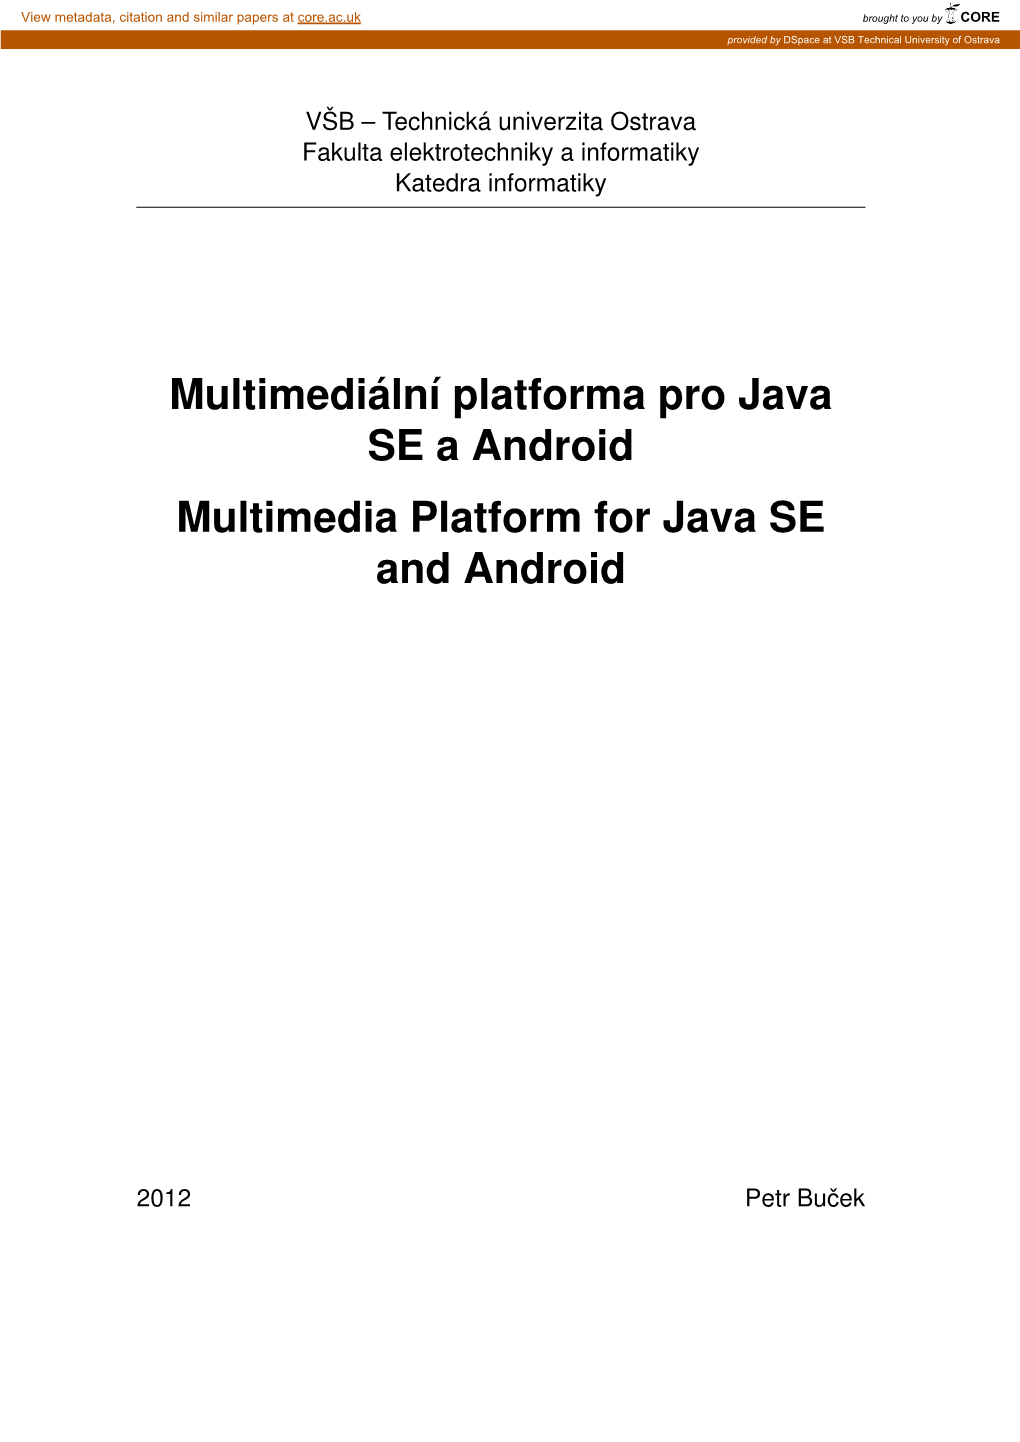 Multimedia´Lnı Platforma Pro Java SE a Android Multimedia Platform For